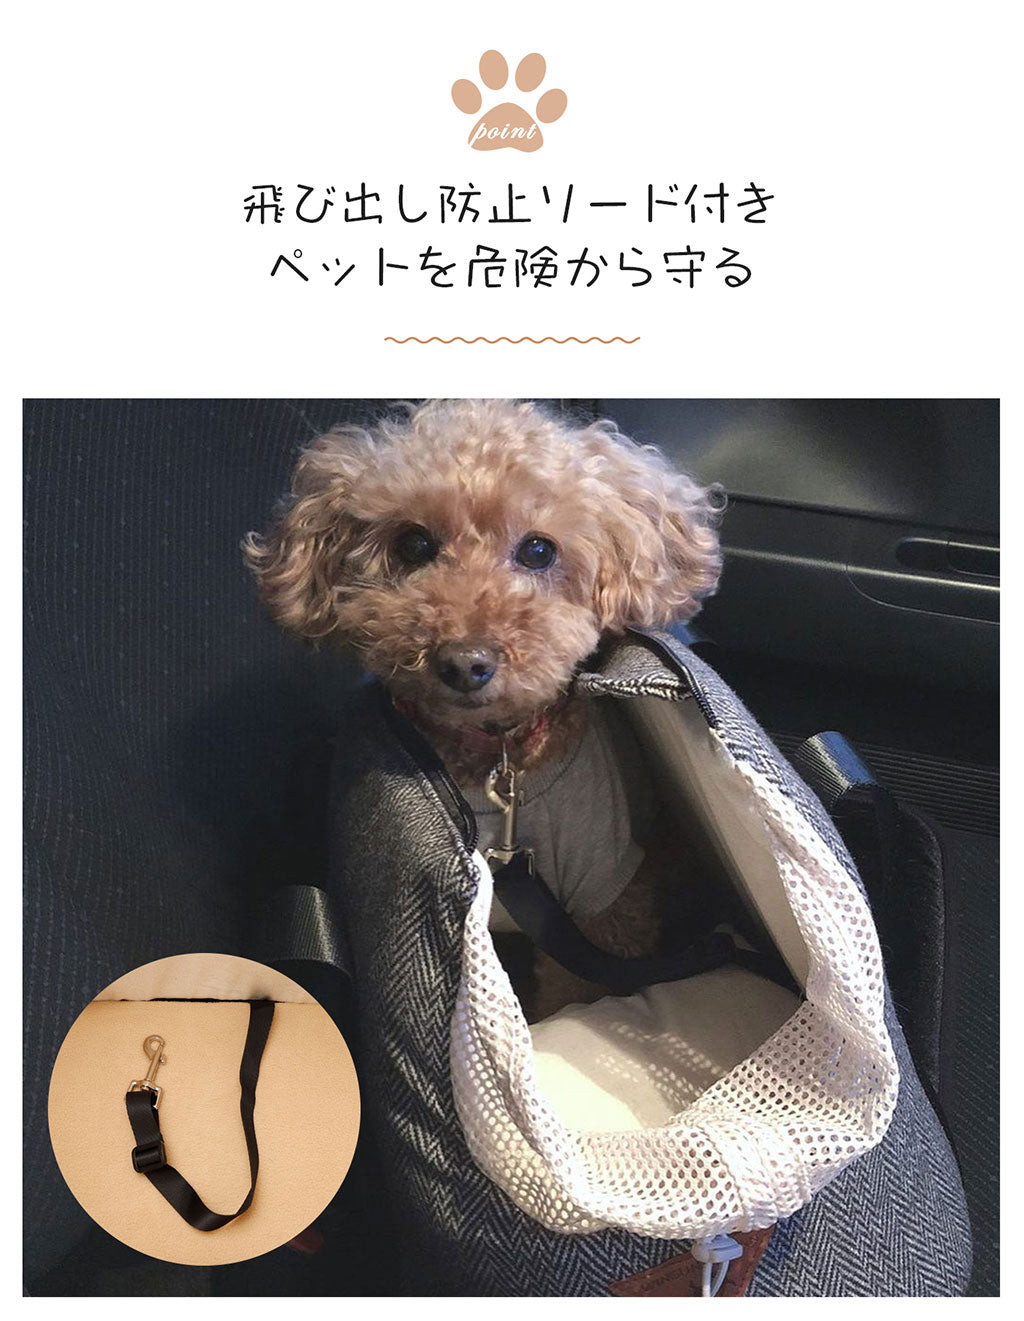 WINSUN 小型犬 猫用 2way ショルダーペットキャリーバッグ – WinsunJapan